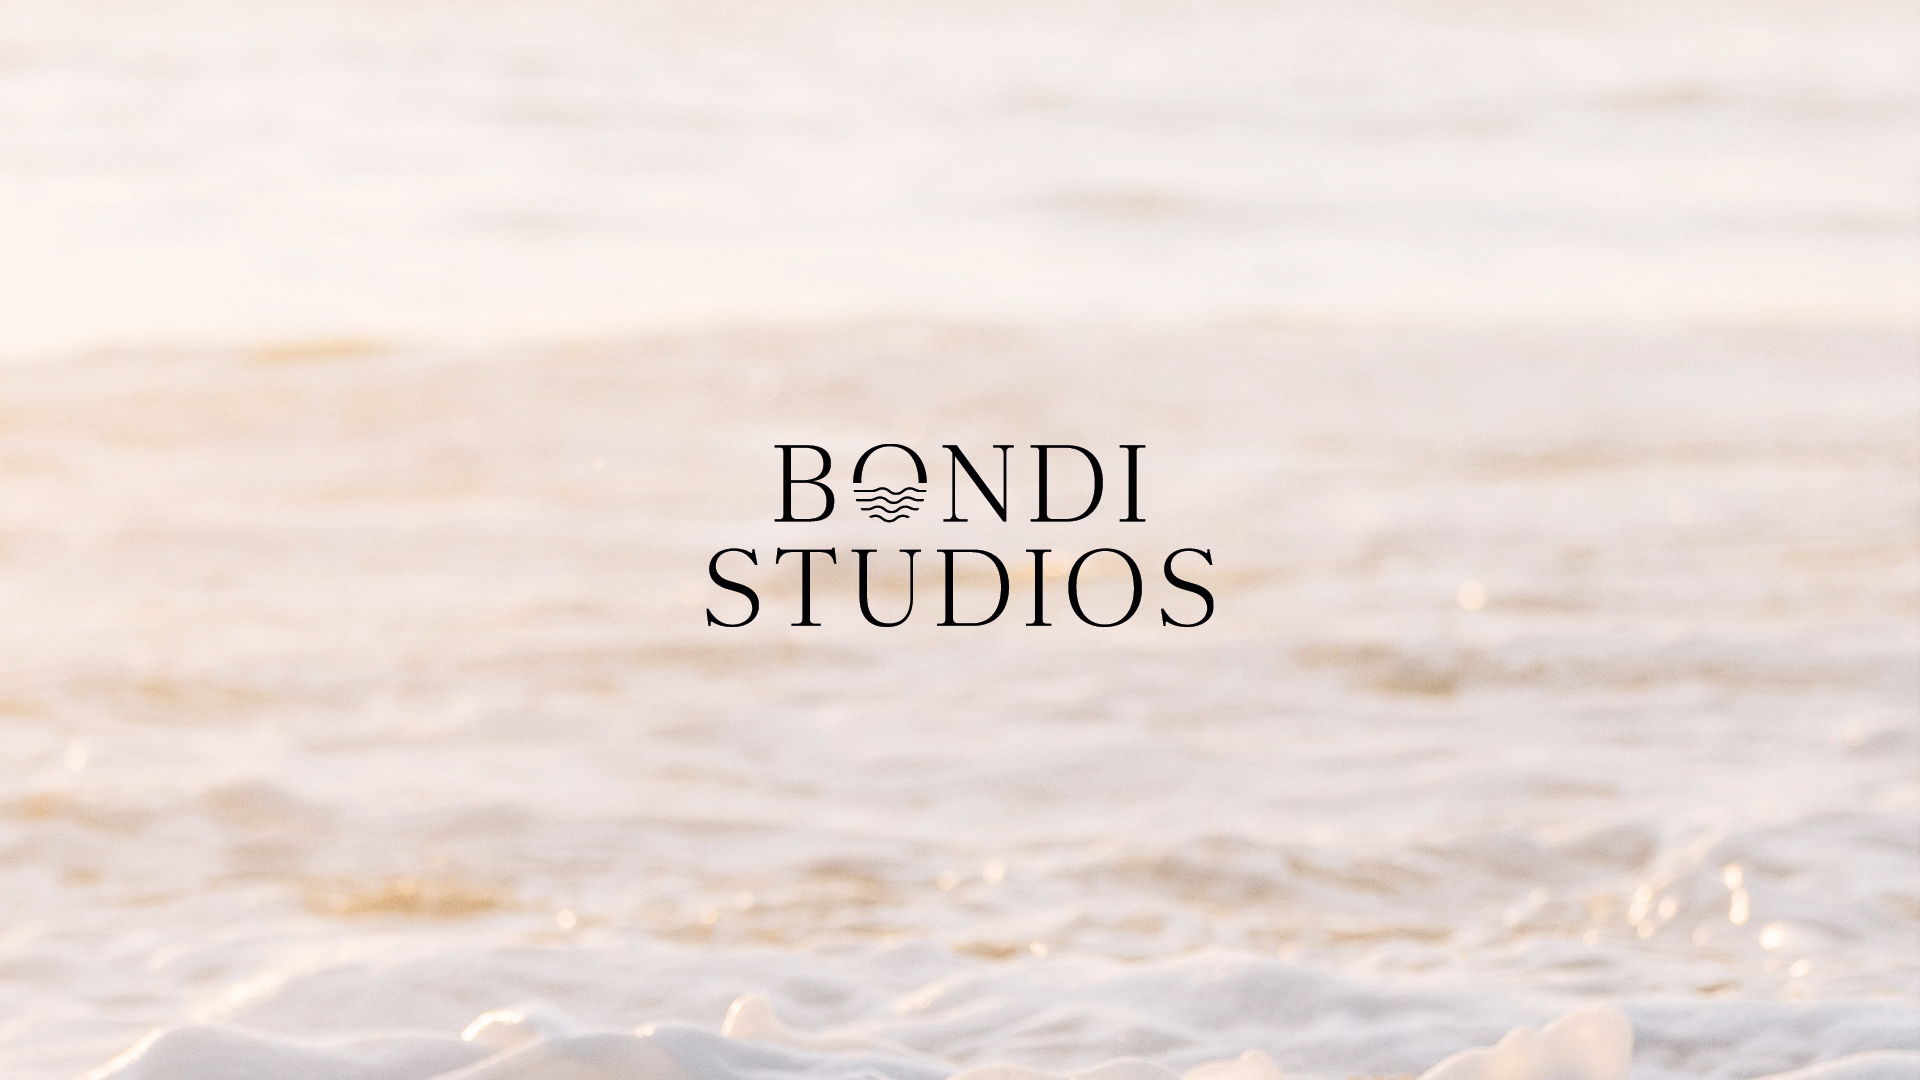 Bondi Studios